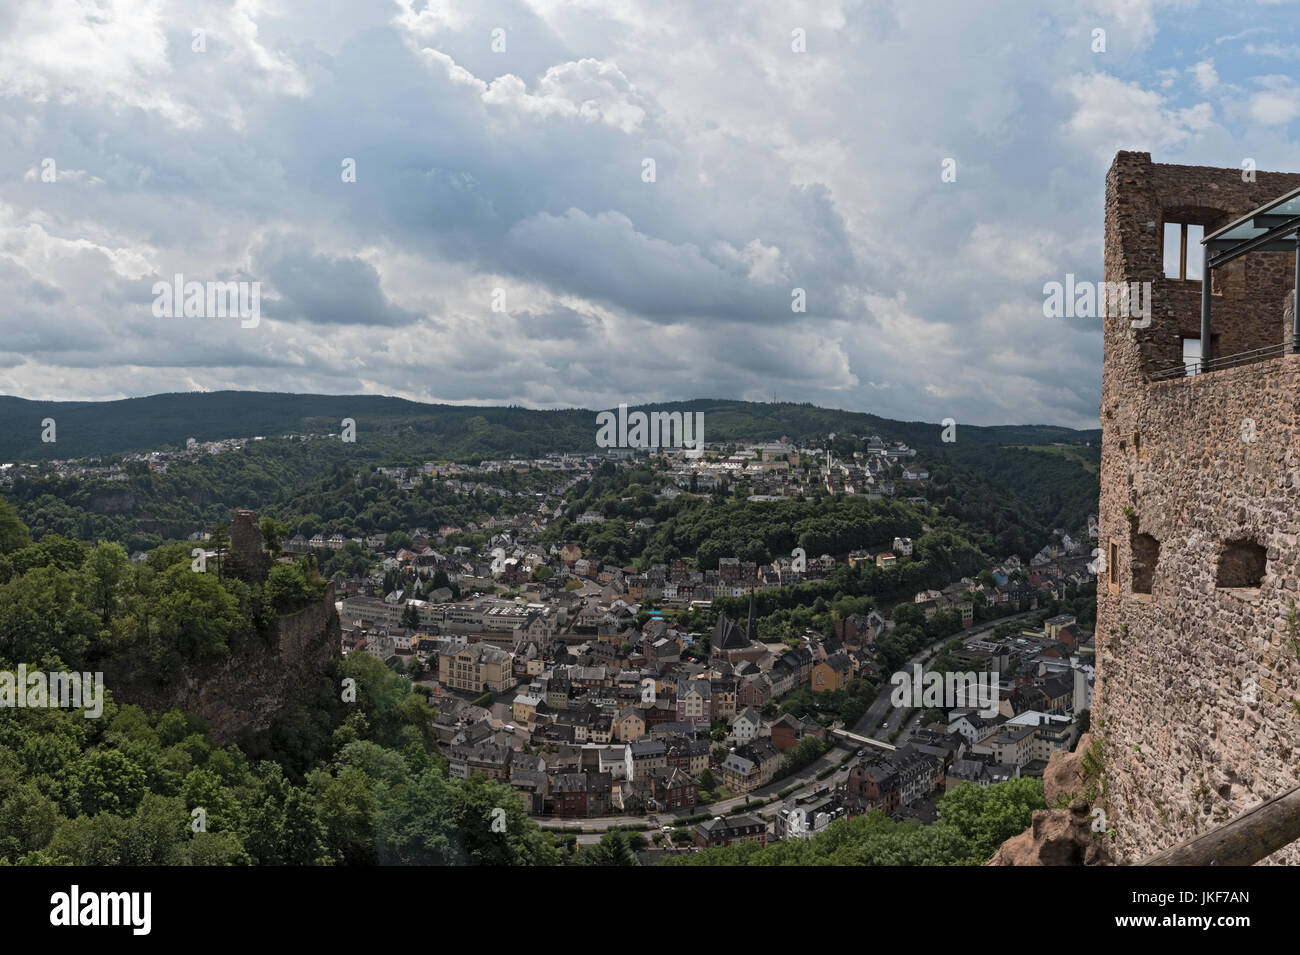 Panorama view of Idar-Oberstein in Rhineland-Palatinate, Germany Stock Photo